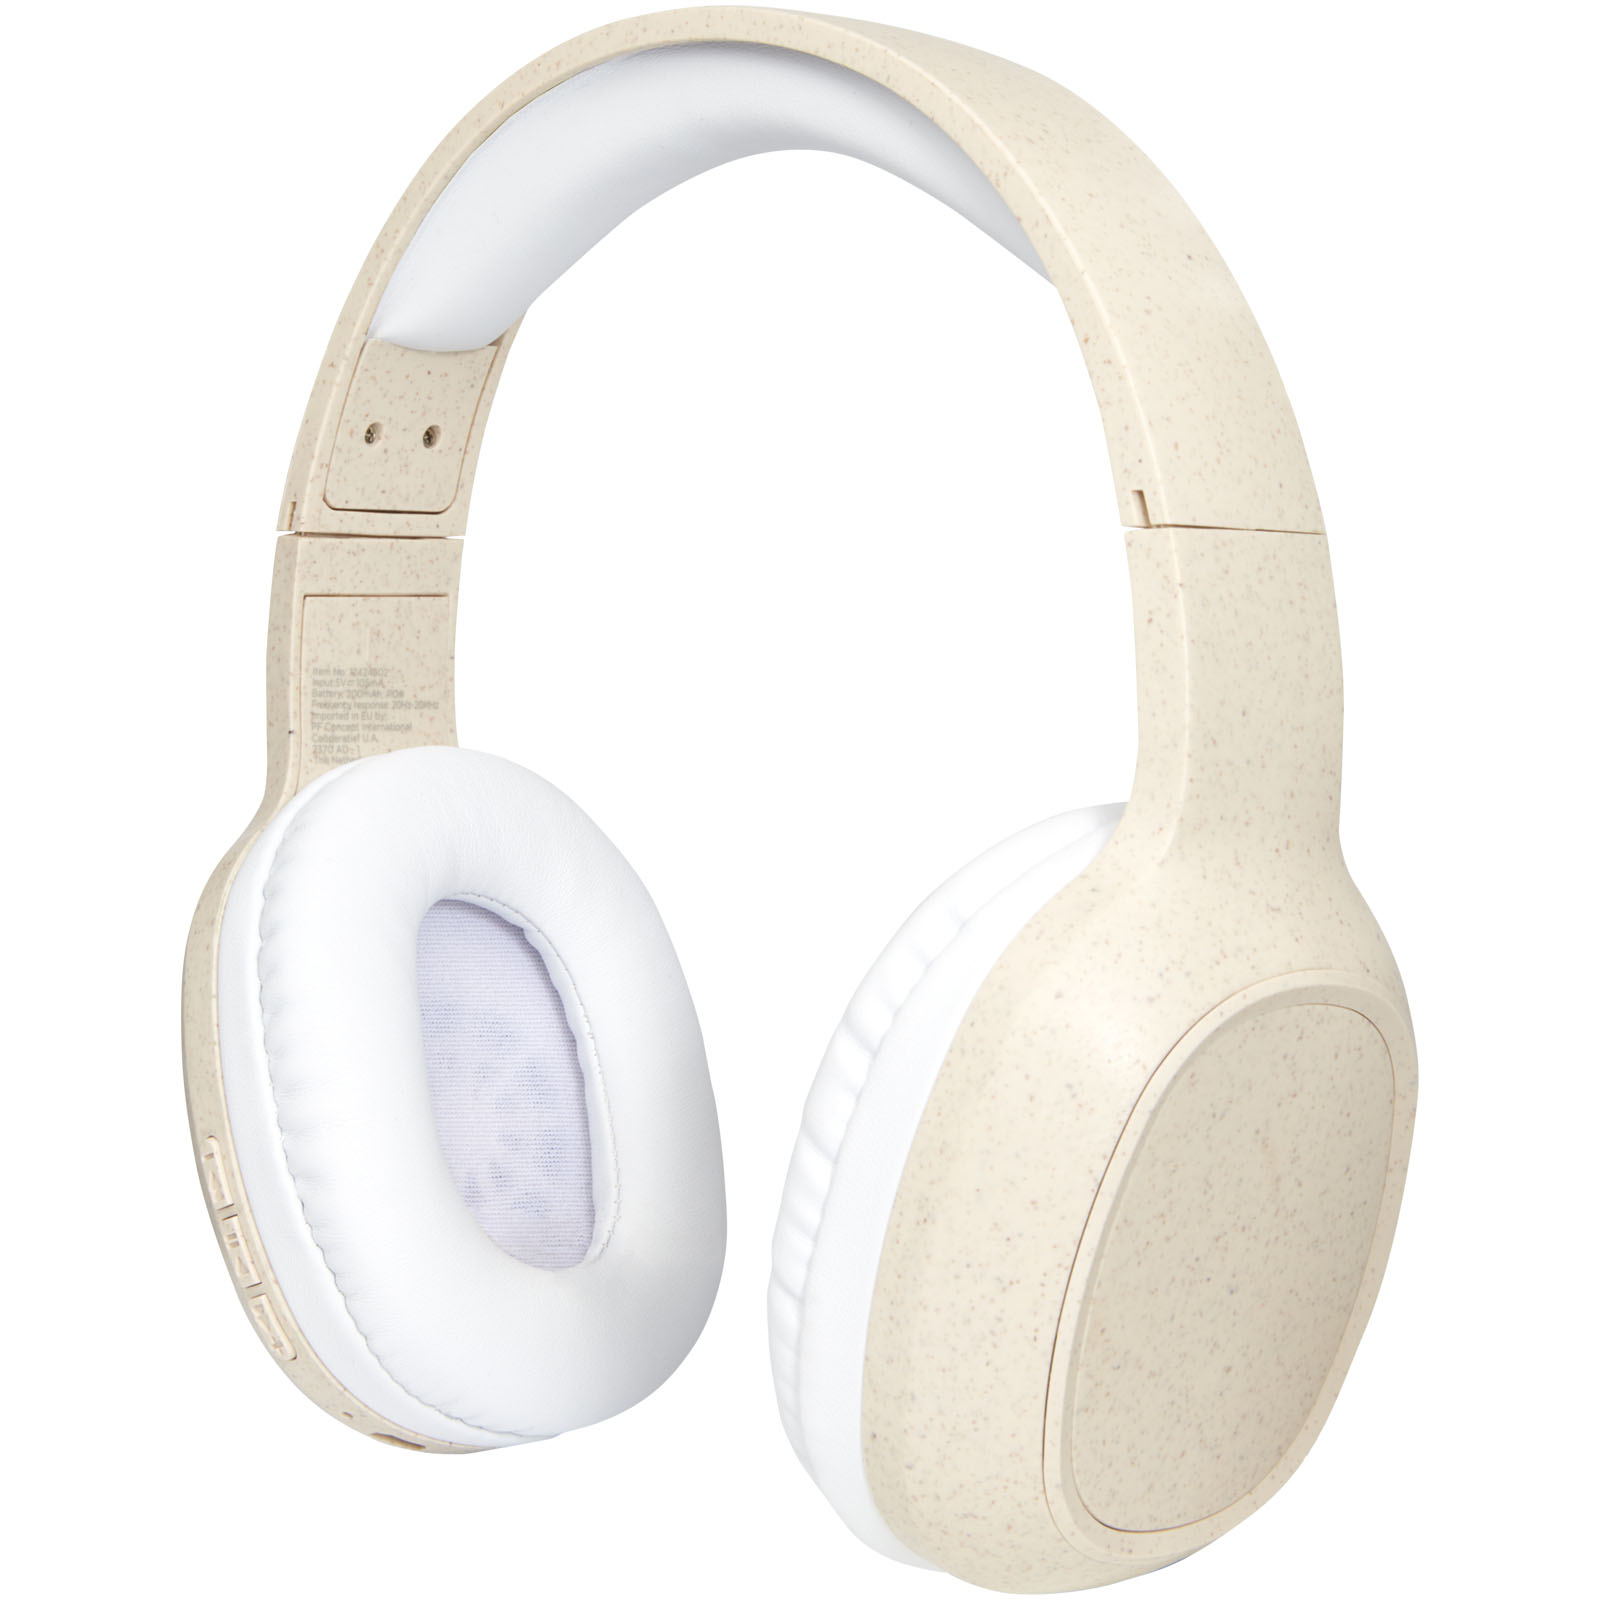 Advertising Headphones - Riff wheat straw Bluetooth® headphones with microphone - 0